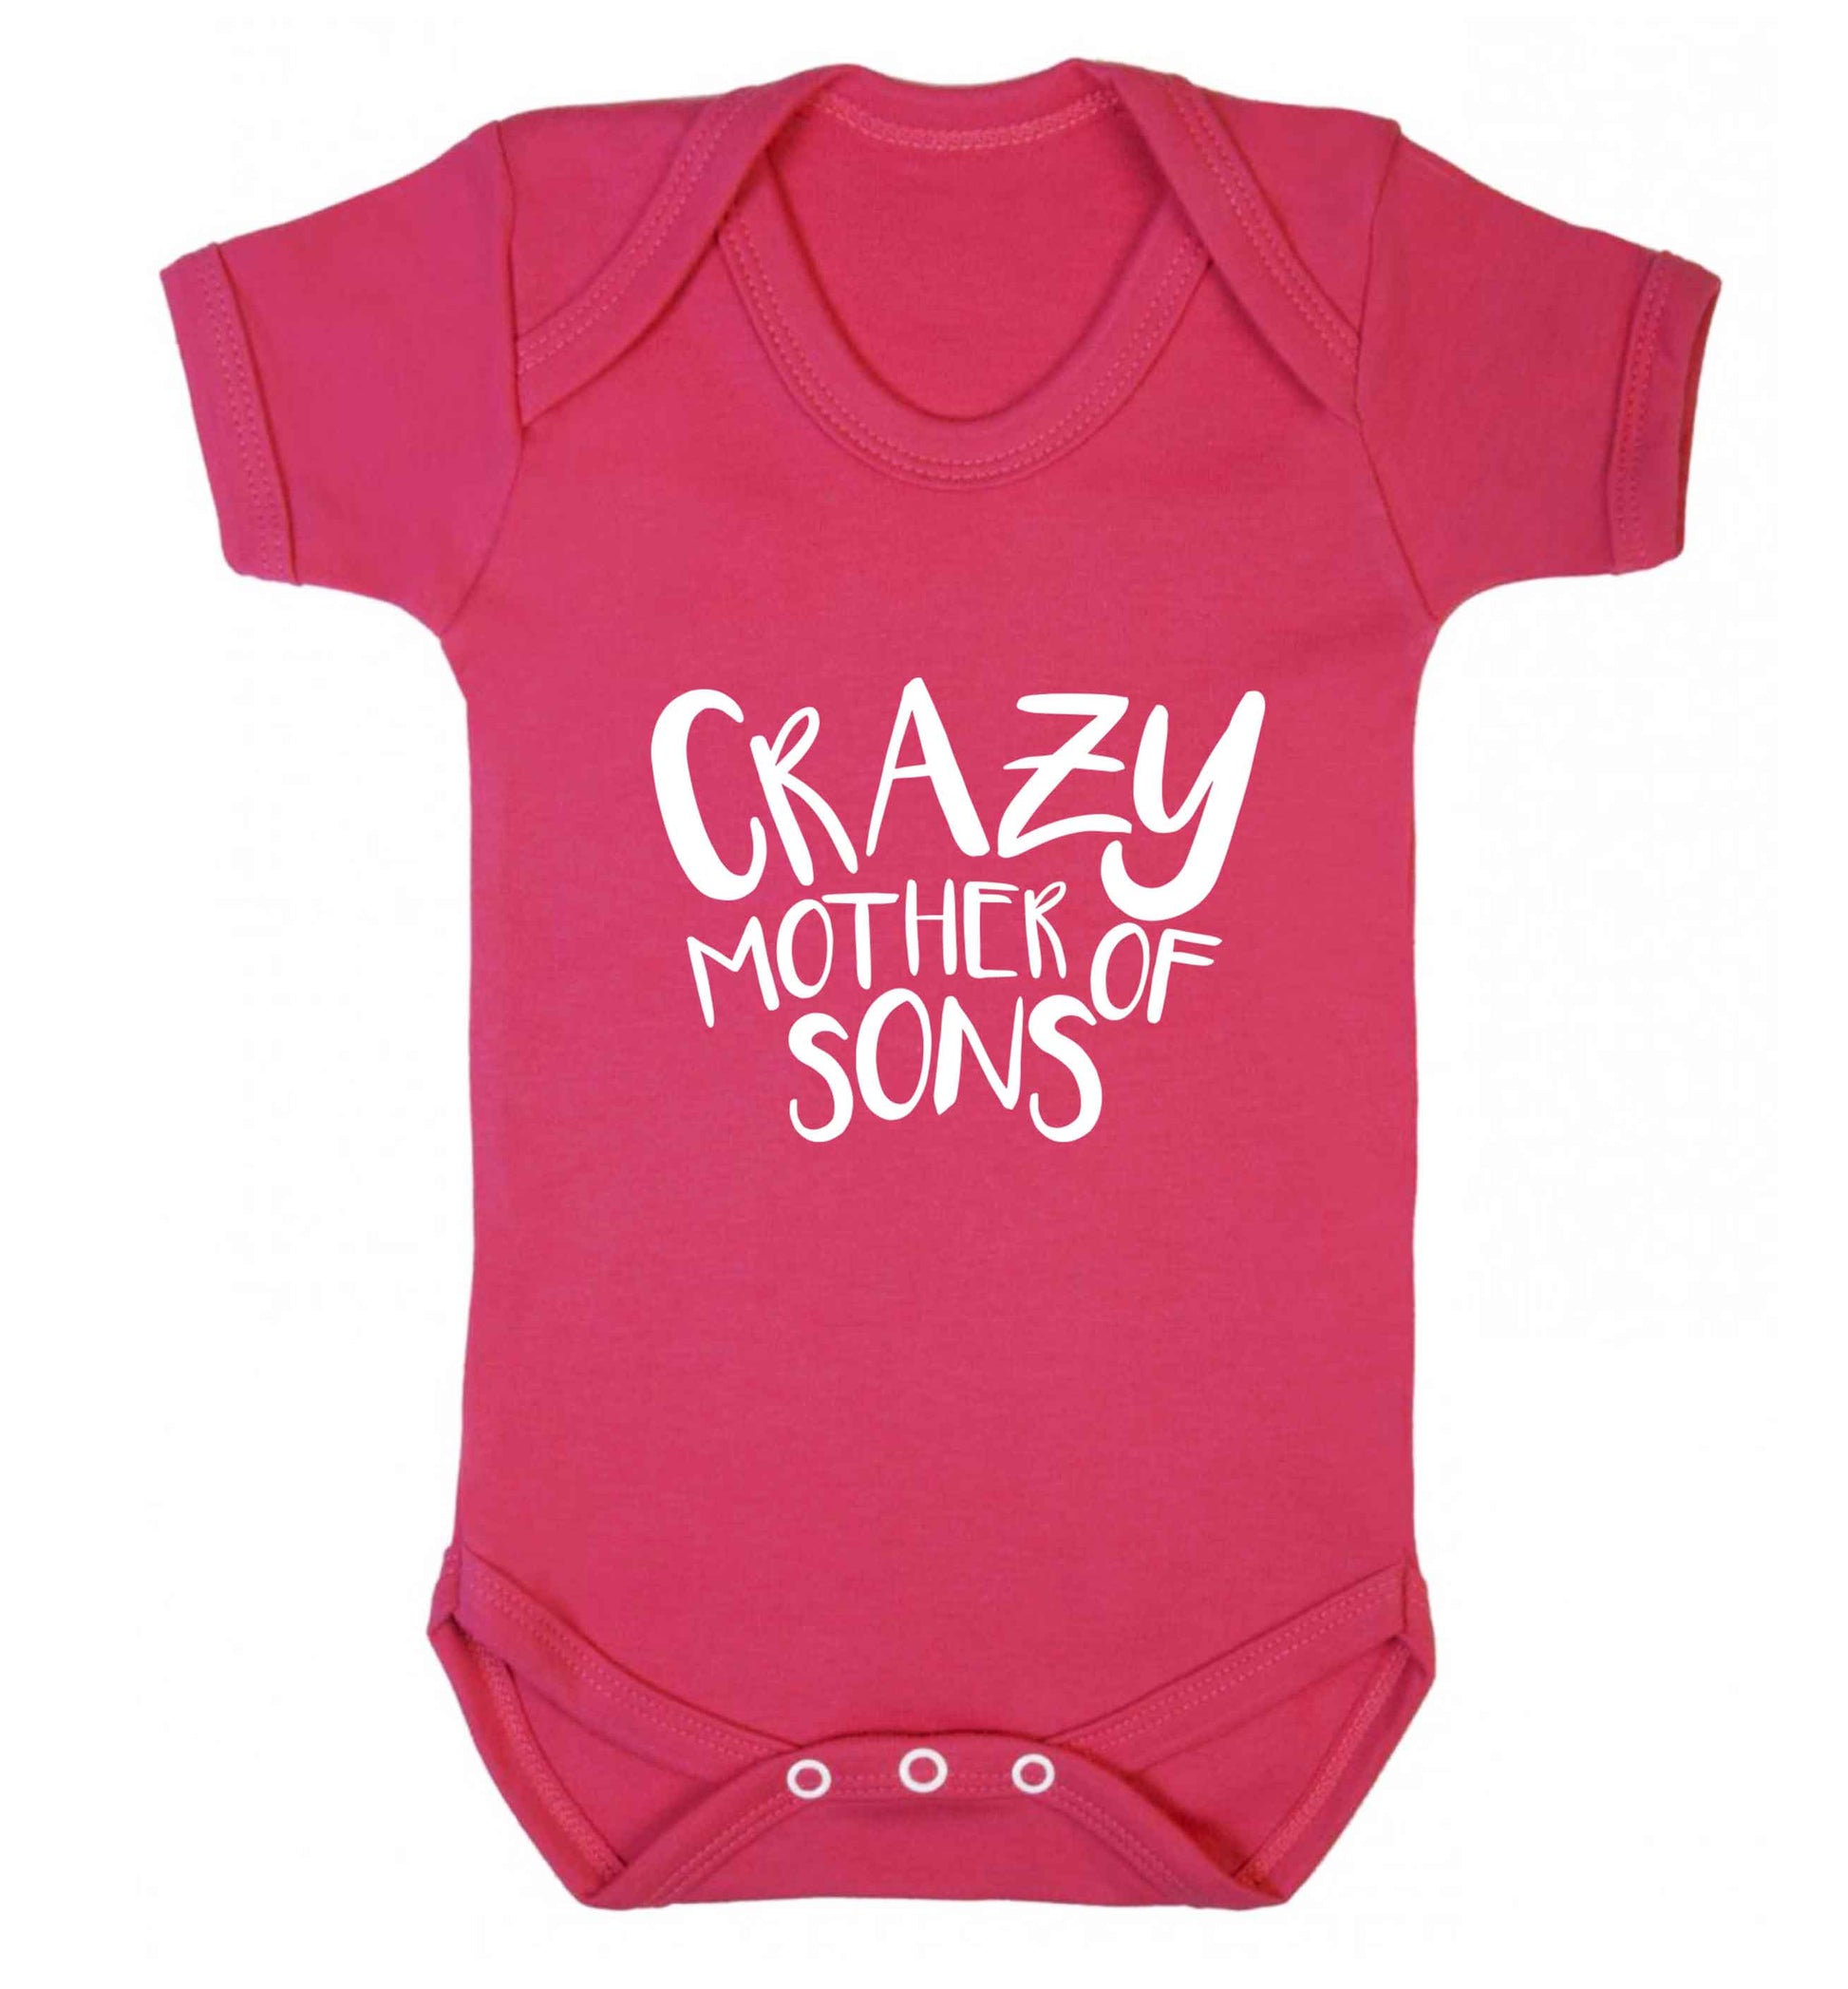 Crazy mother of sons baby vest dark pink 18-24 months